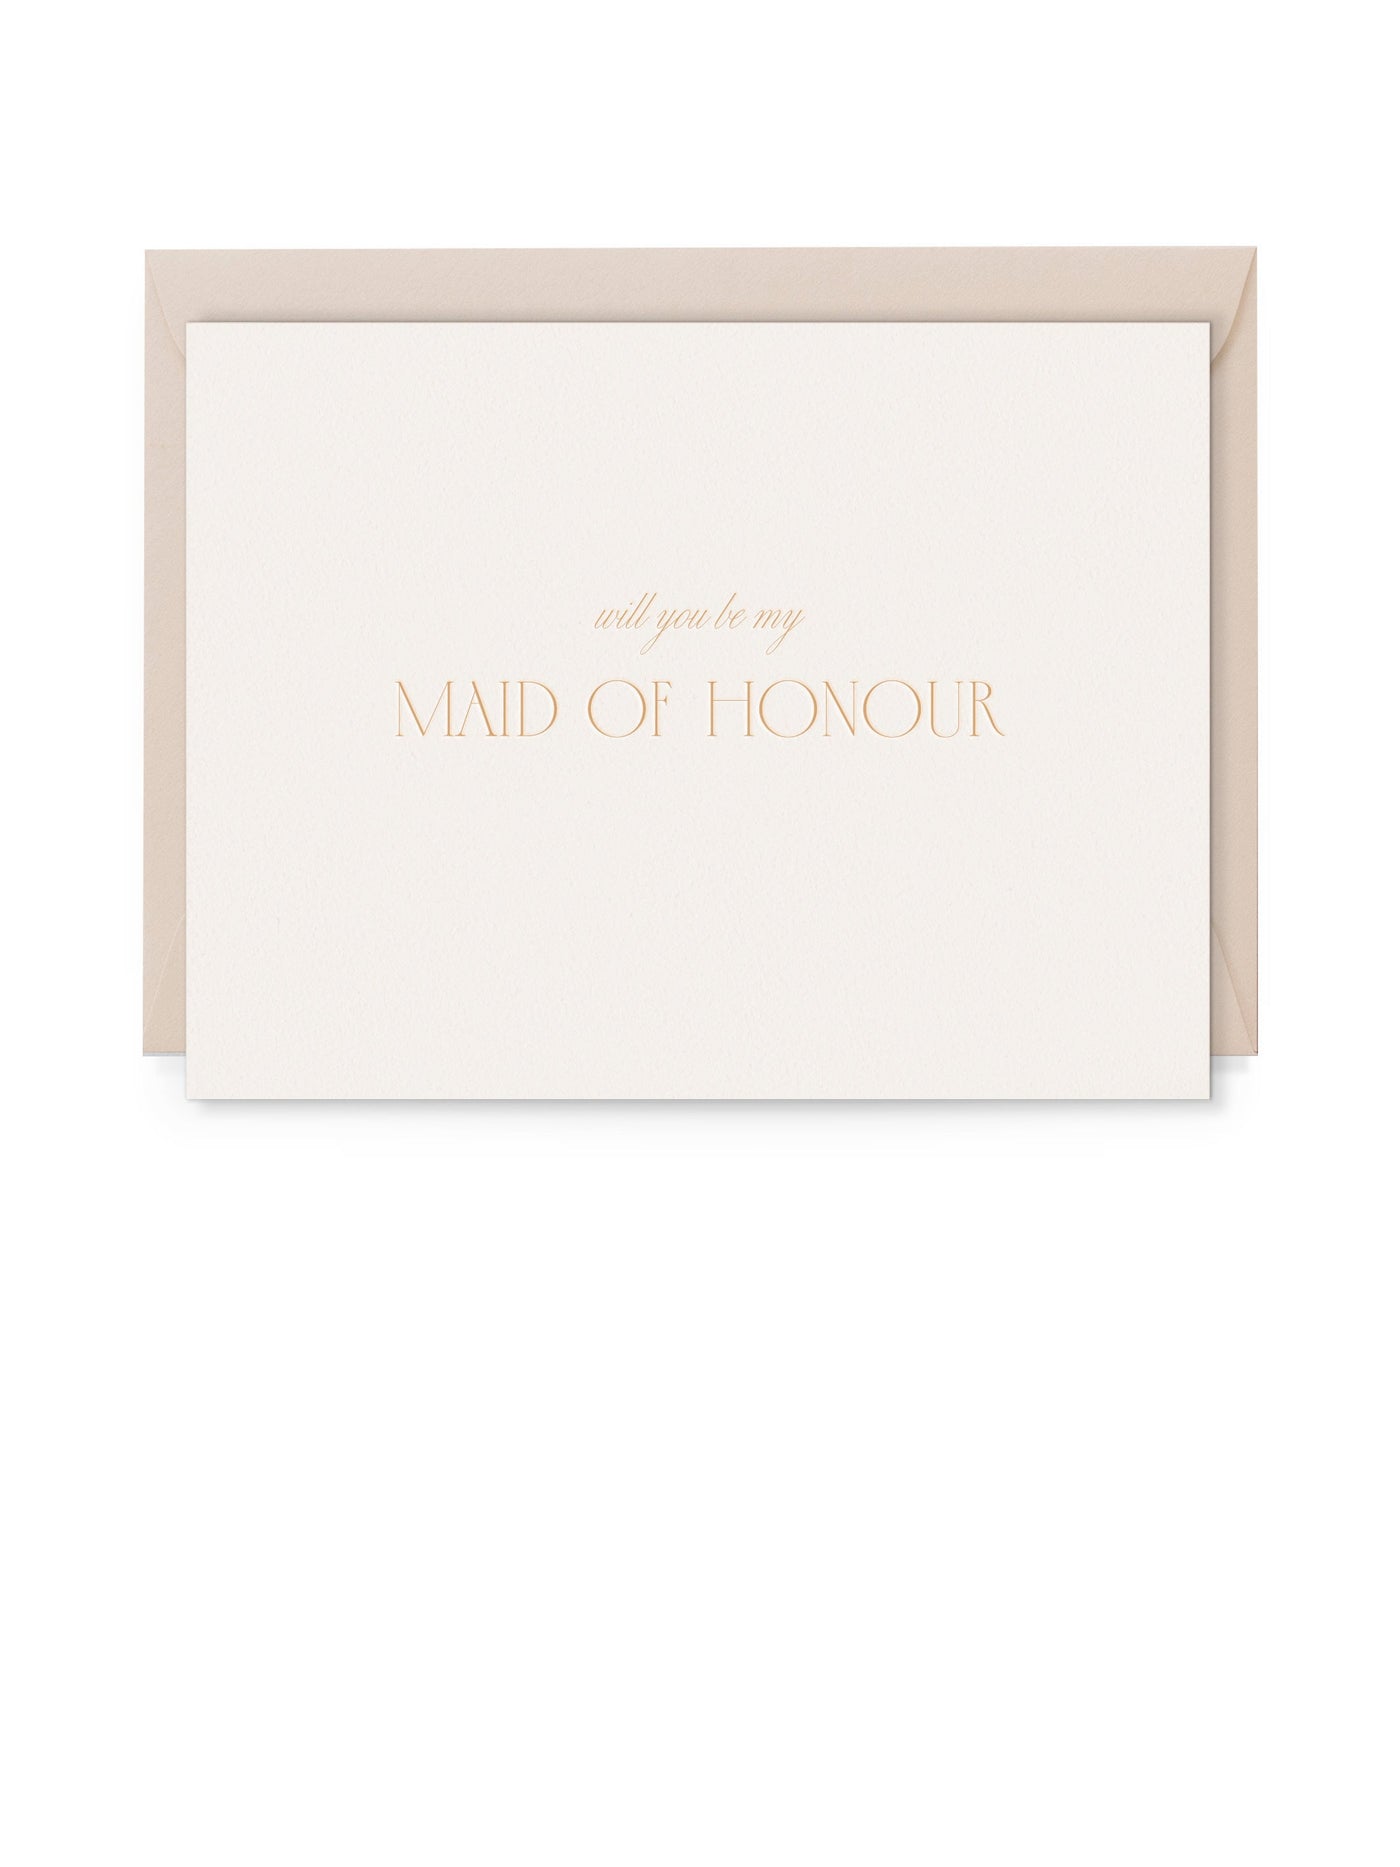 Maid of Honour Proposal Card - Foil